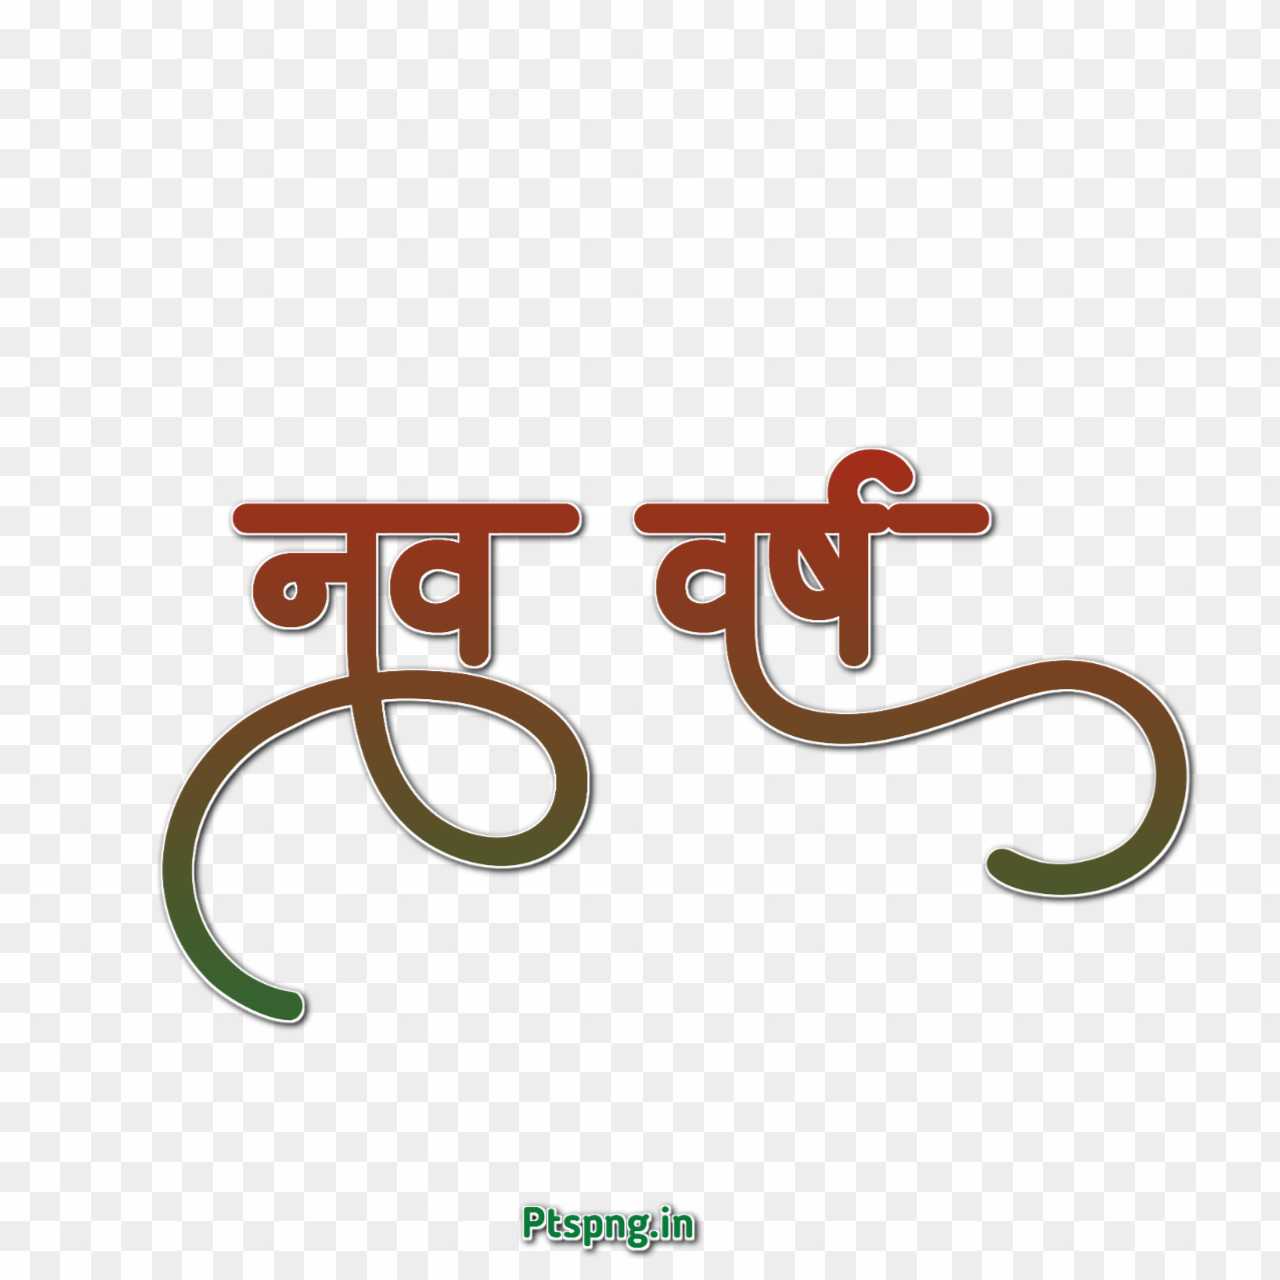 Nav varsh calligraphy text png images in Hindi